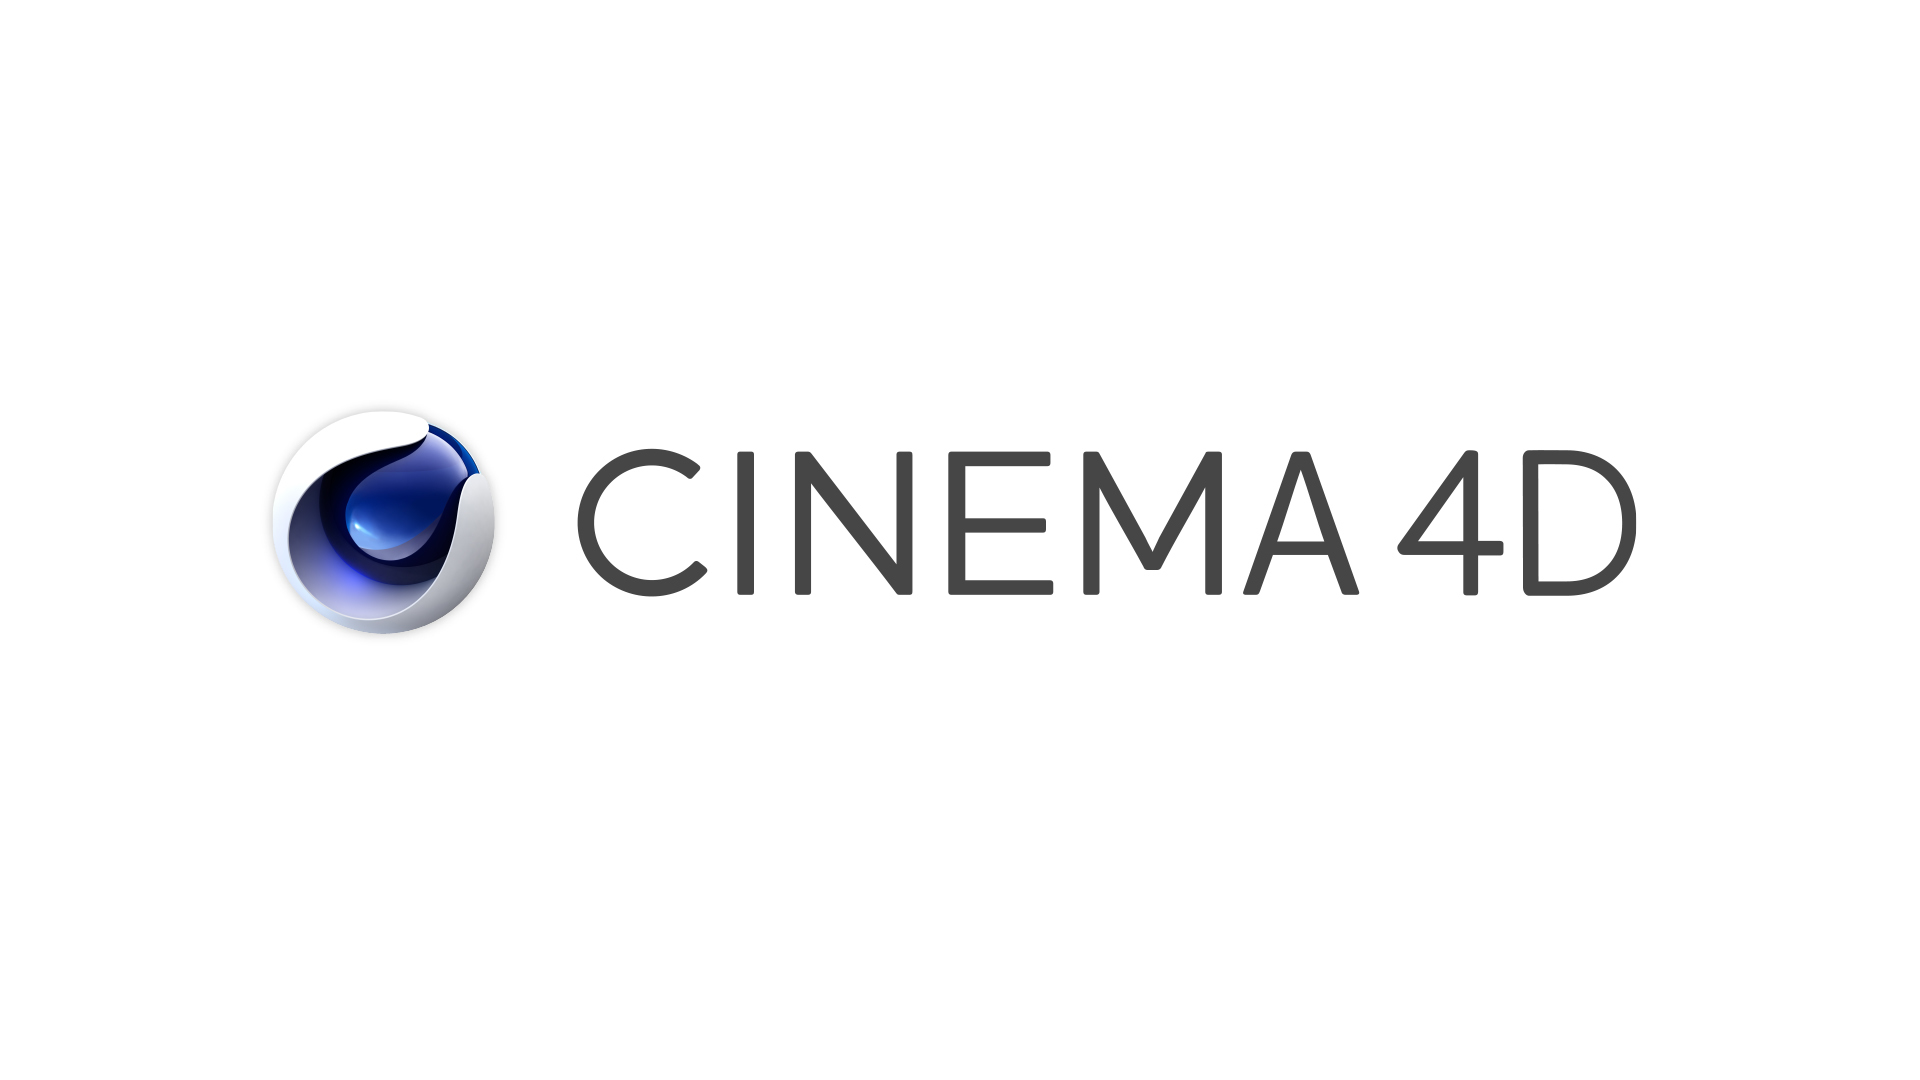 Cinema 4d - Cinema 4d Logo - CleanPNG / KissPNG